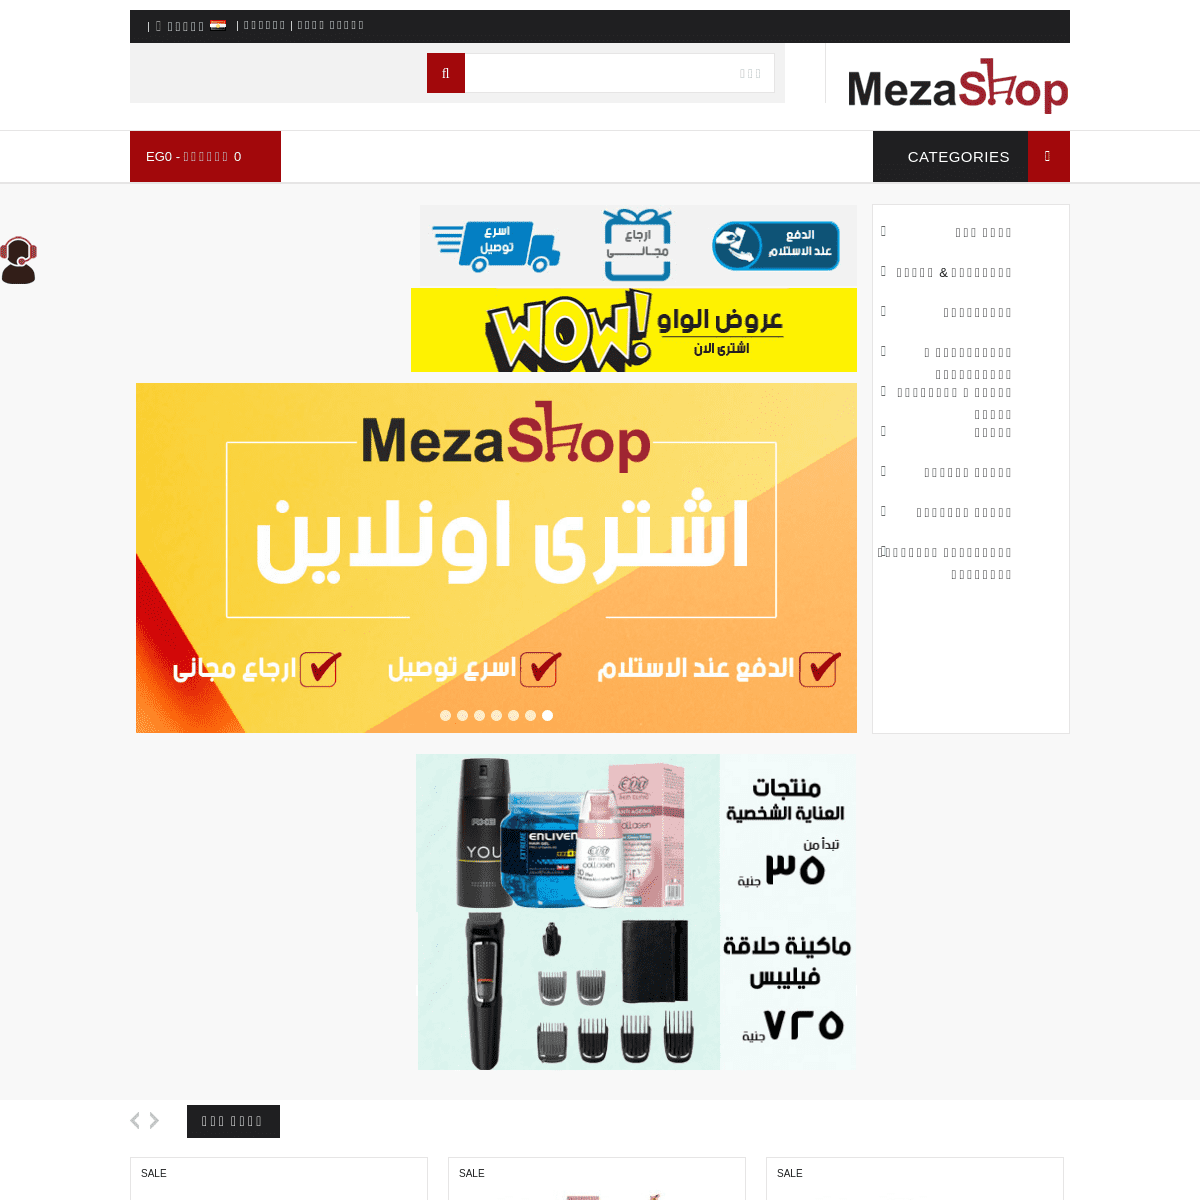 A complete backup of mezashop.com